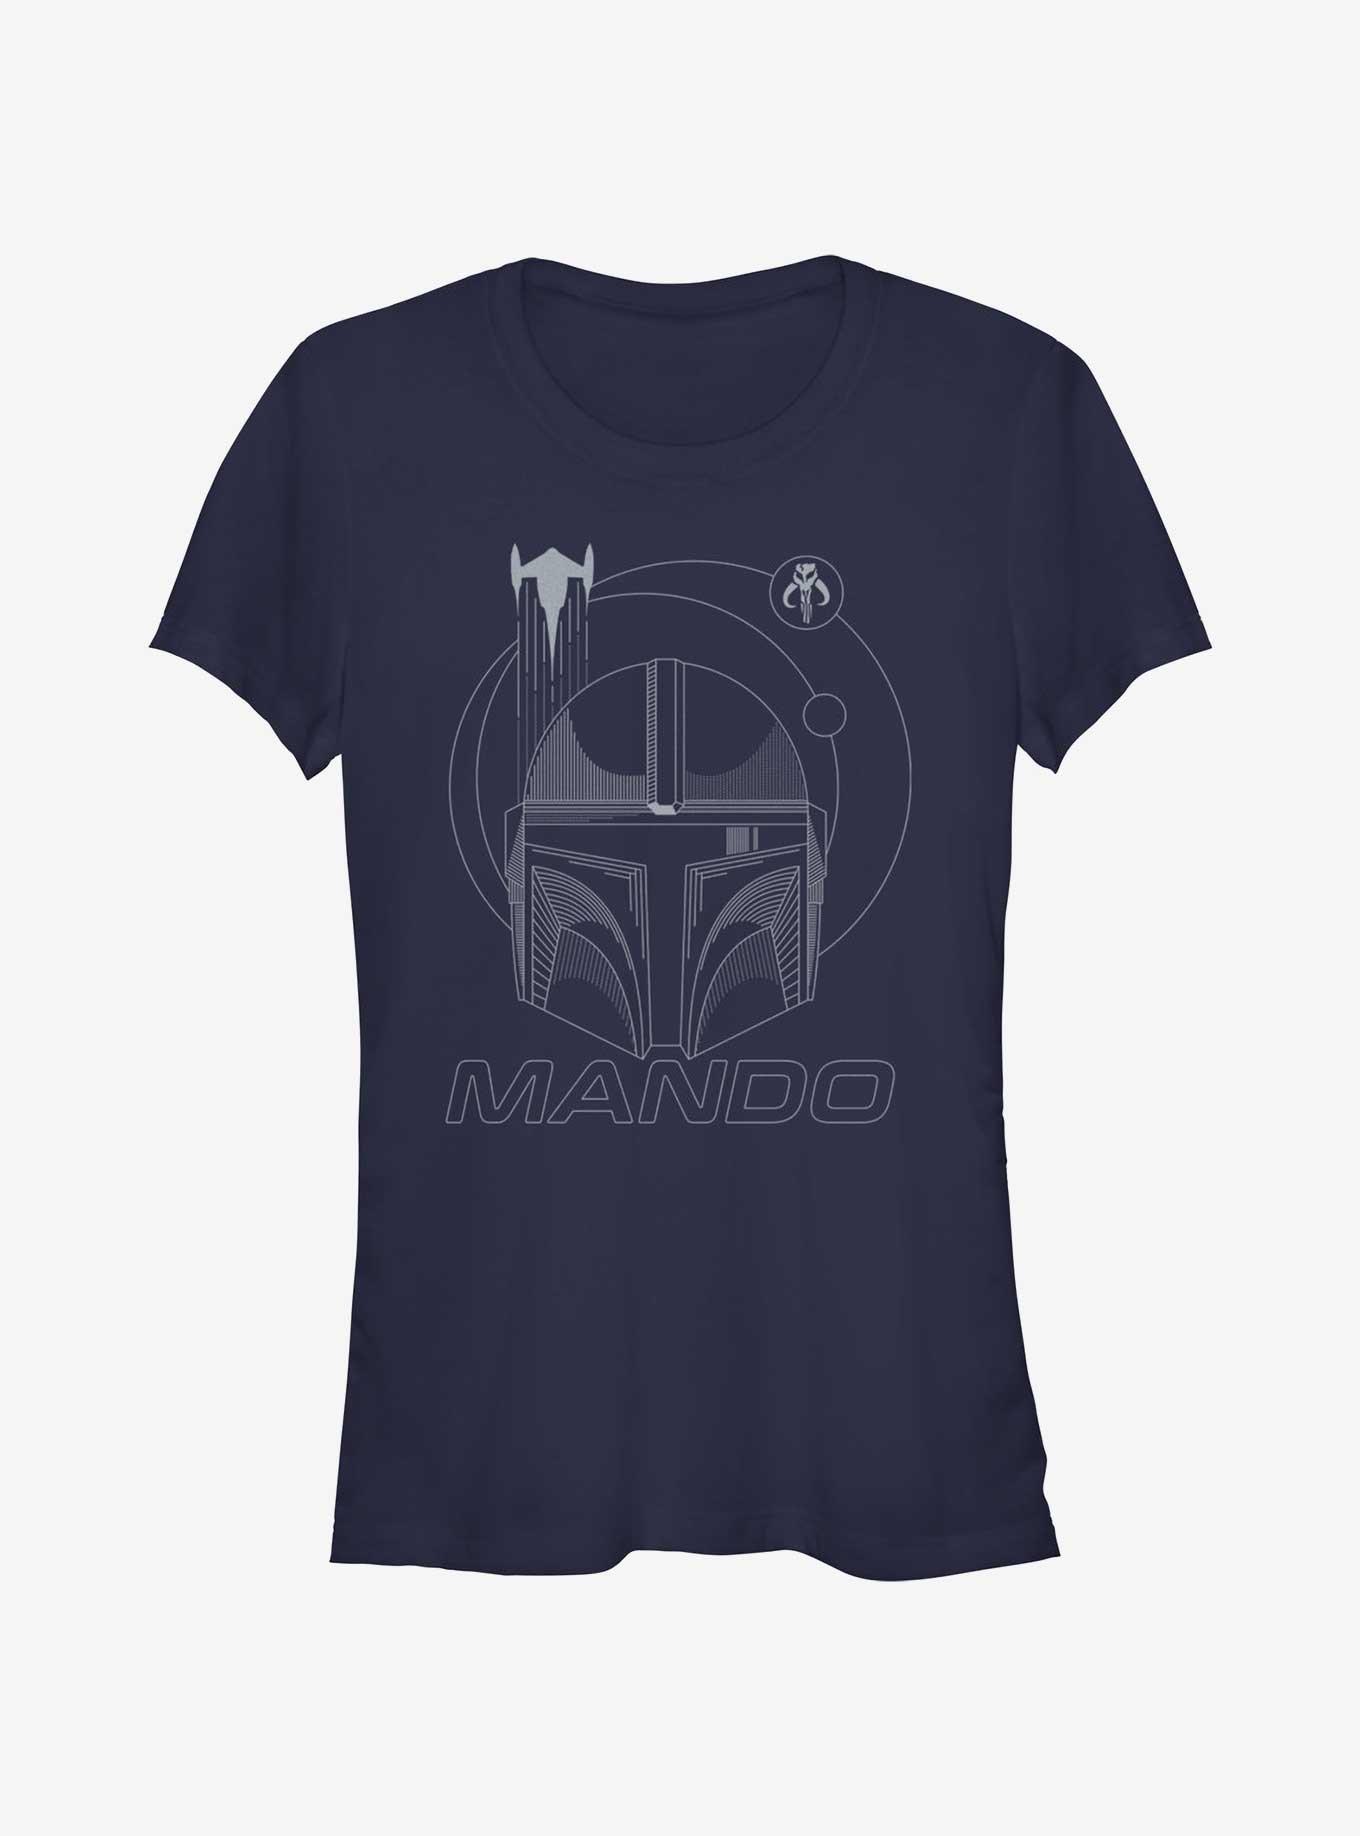 Star Wars The Mandalorian Mando Line Art Girls T-Shirt